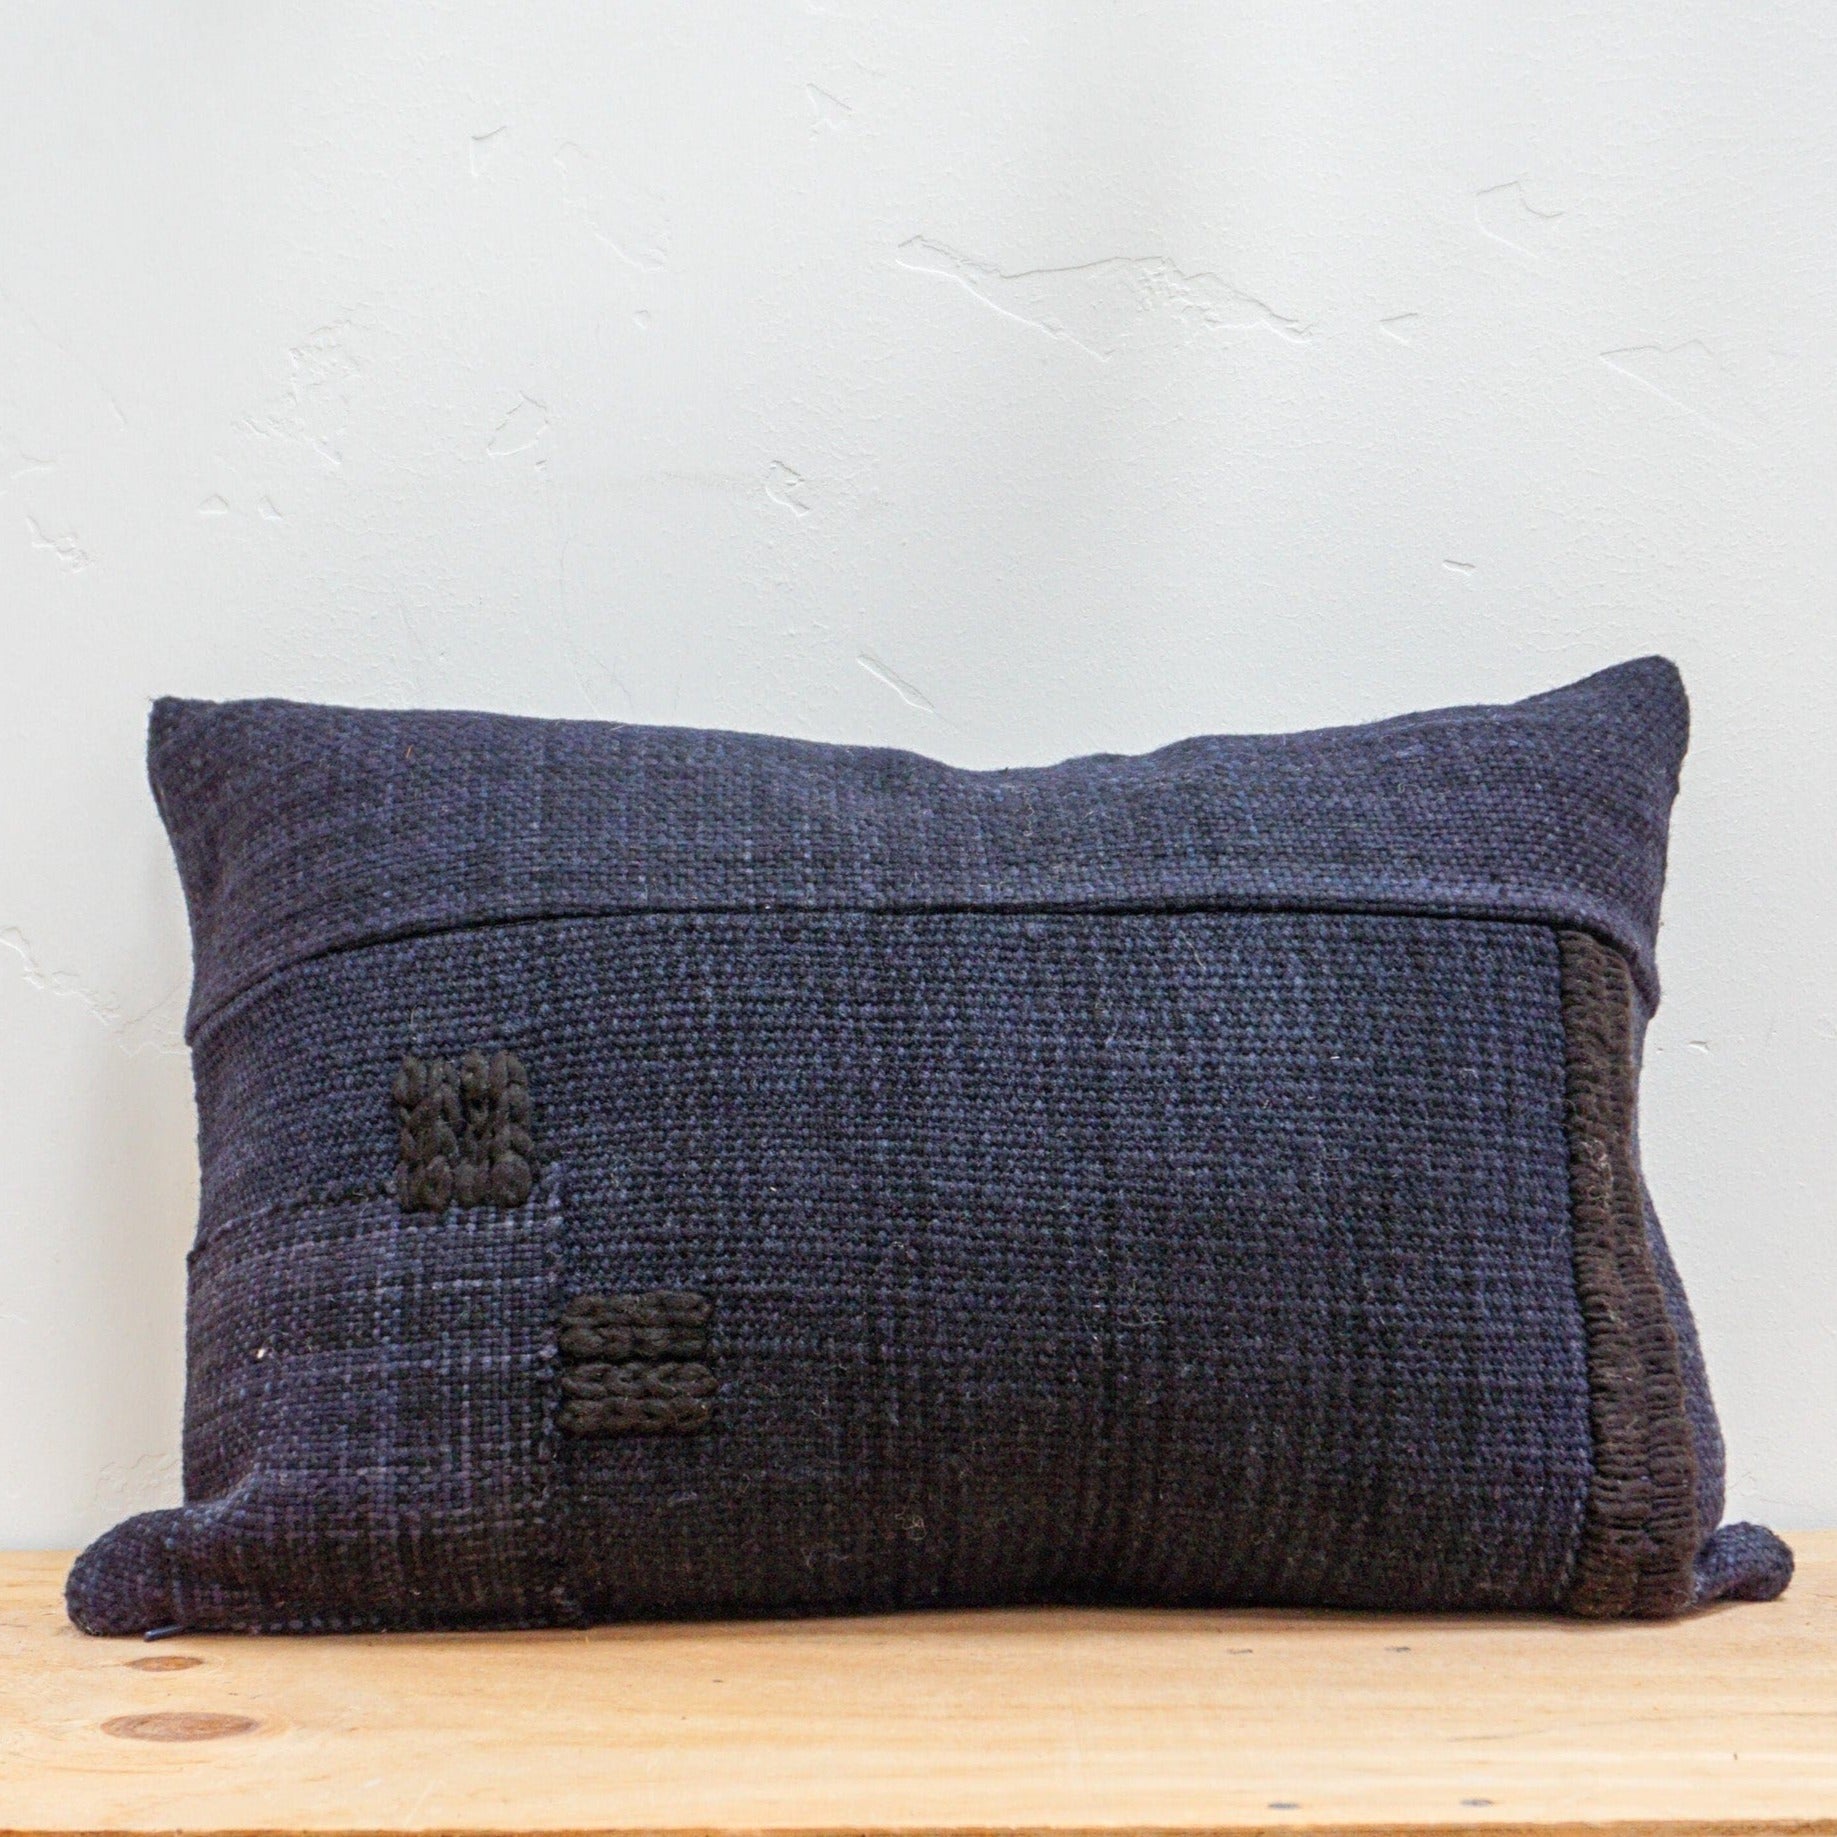 Treko Pillows Makun Collection: Blue and Black Patchwork Stitch Pillow 24 x 15 by Treko